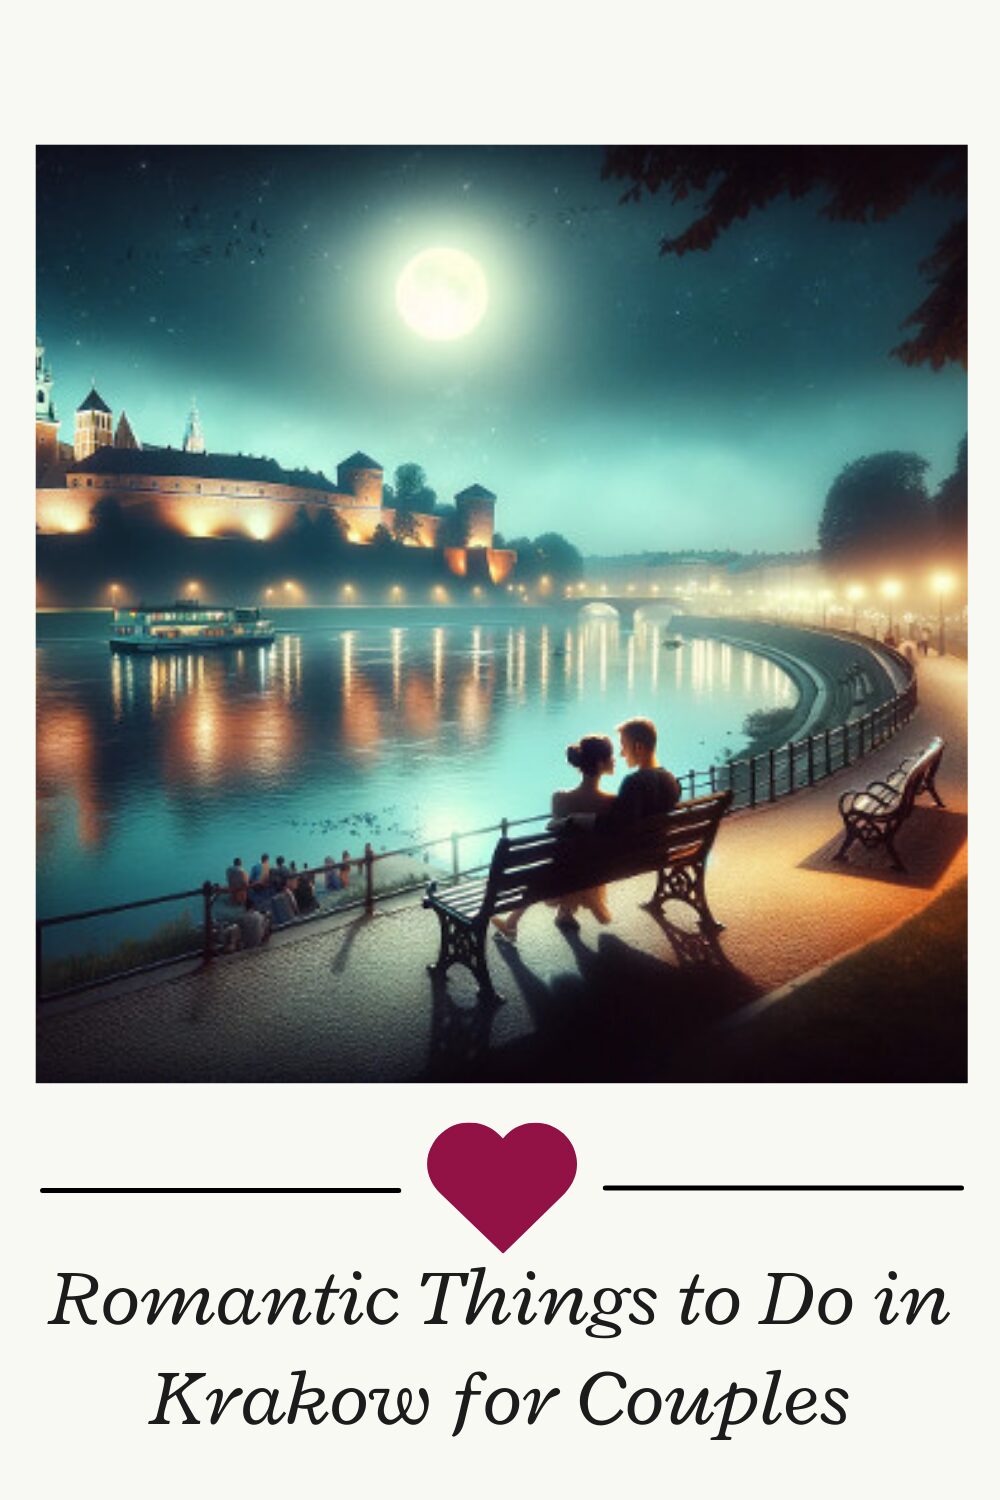 Most Romantic Activities for Couples in Krakow